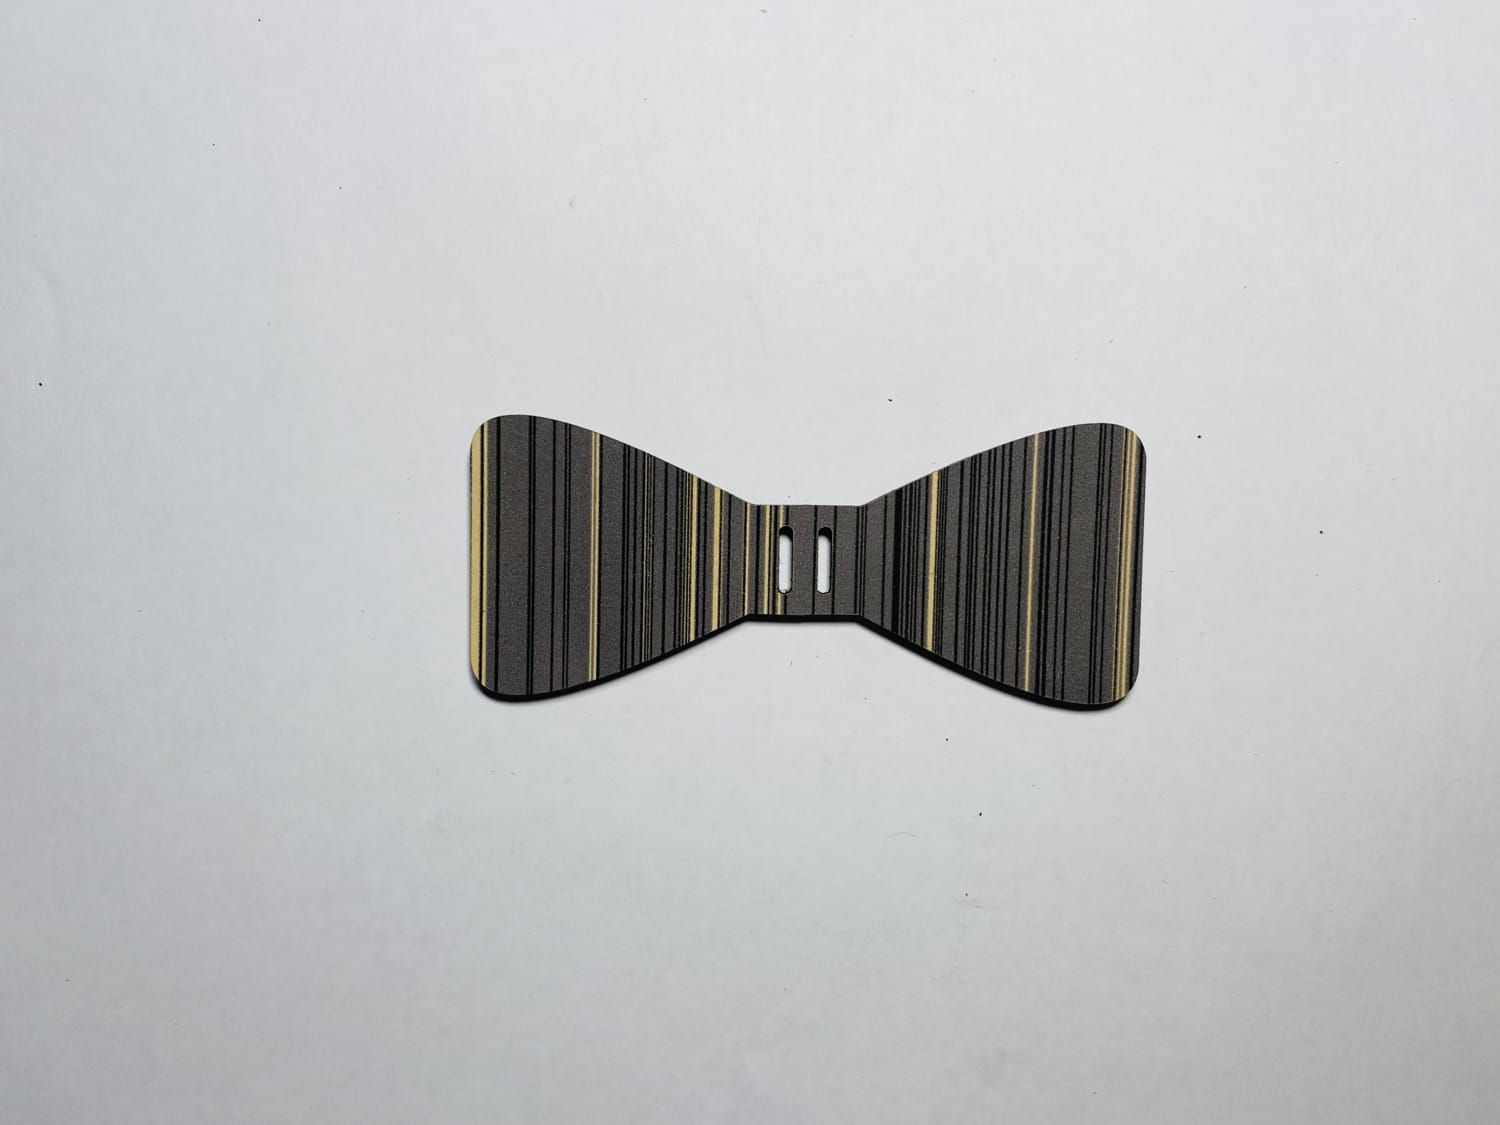 Laser Cut Bowtie Unfinished Wood Shape Cutout Free Vector